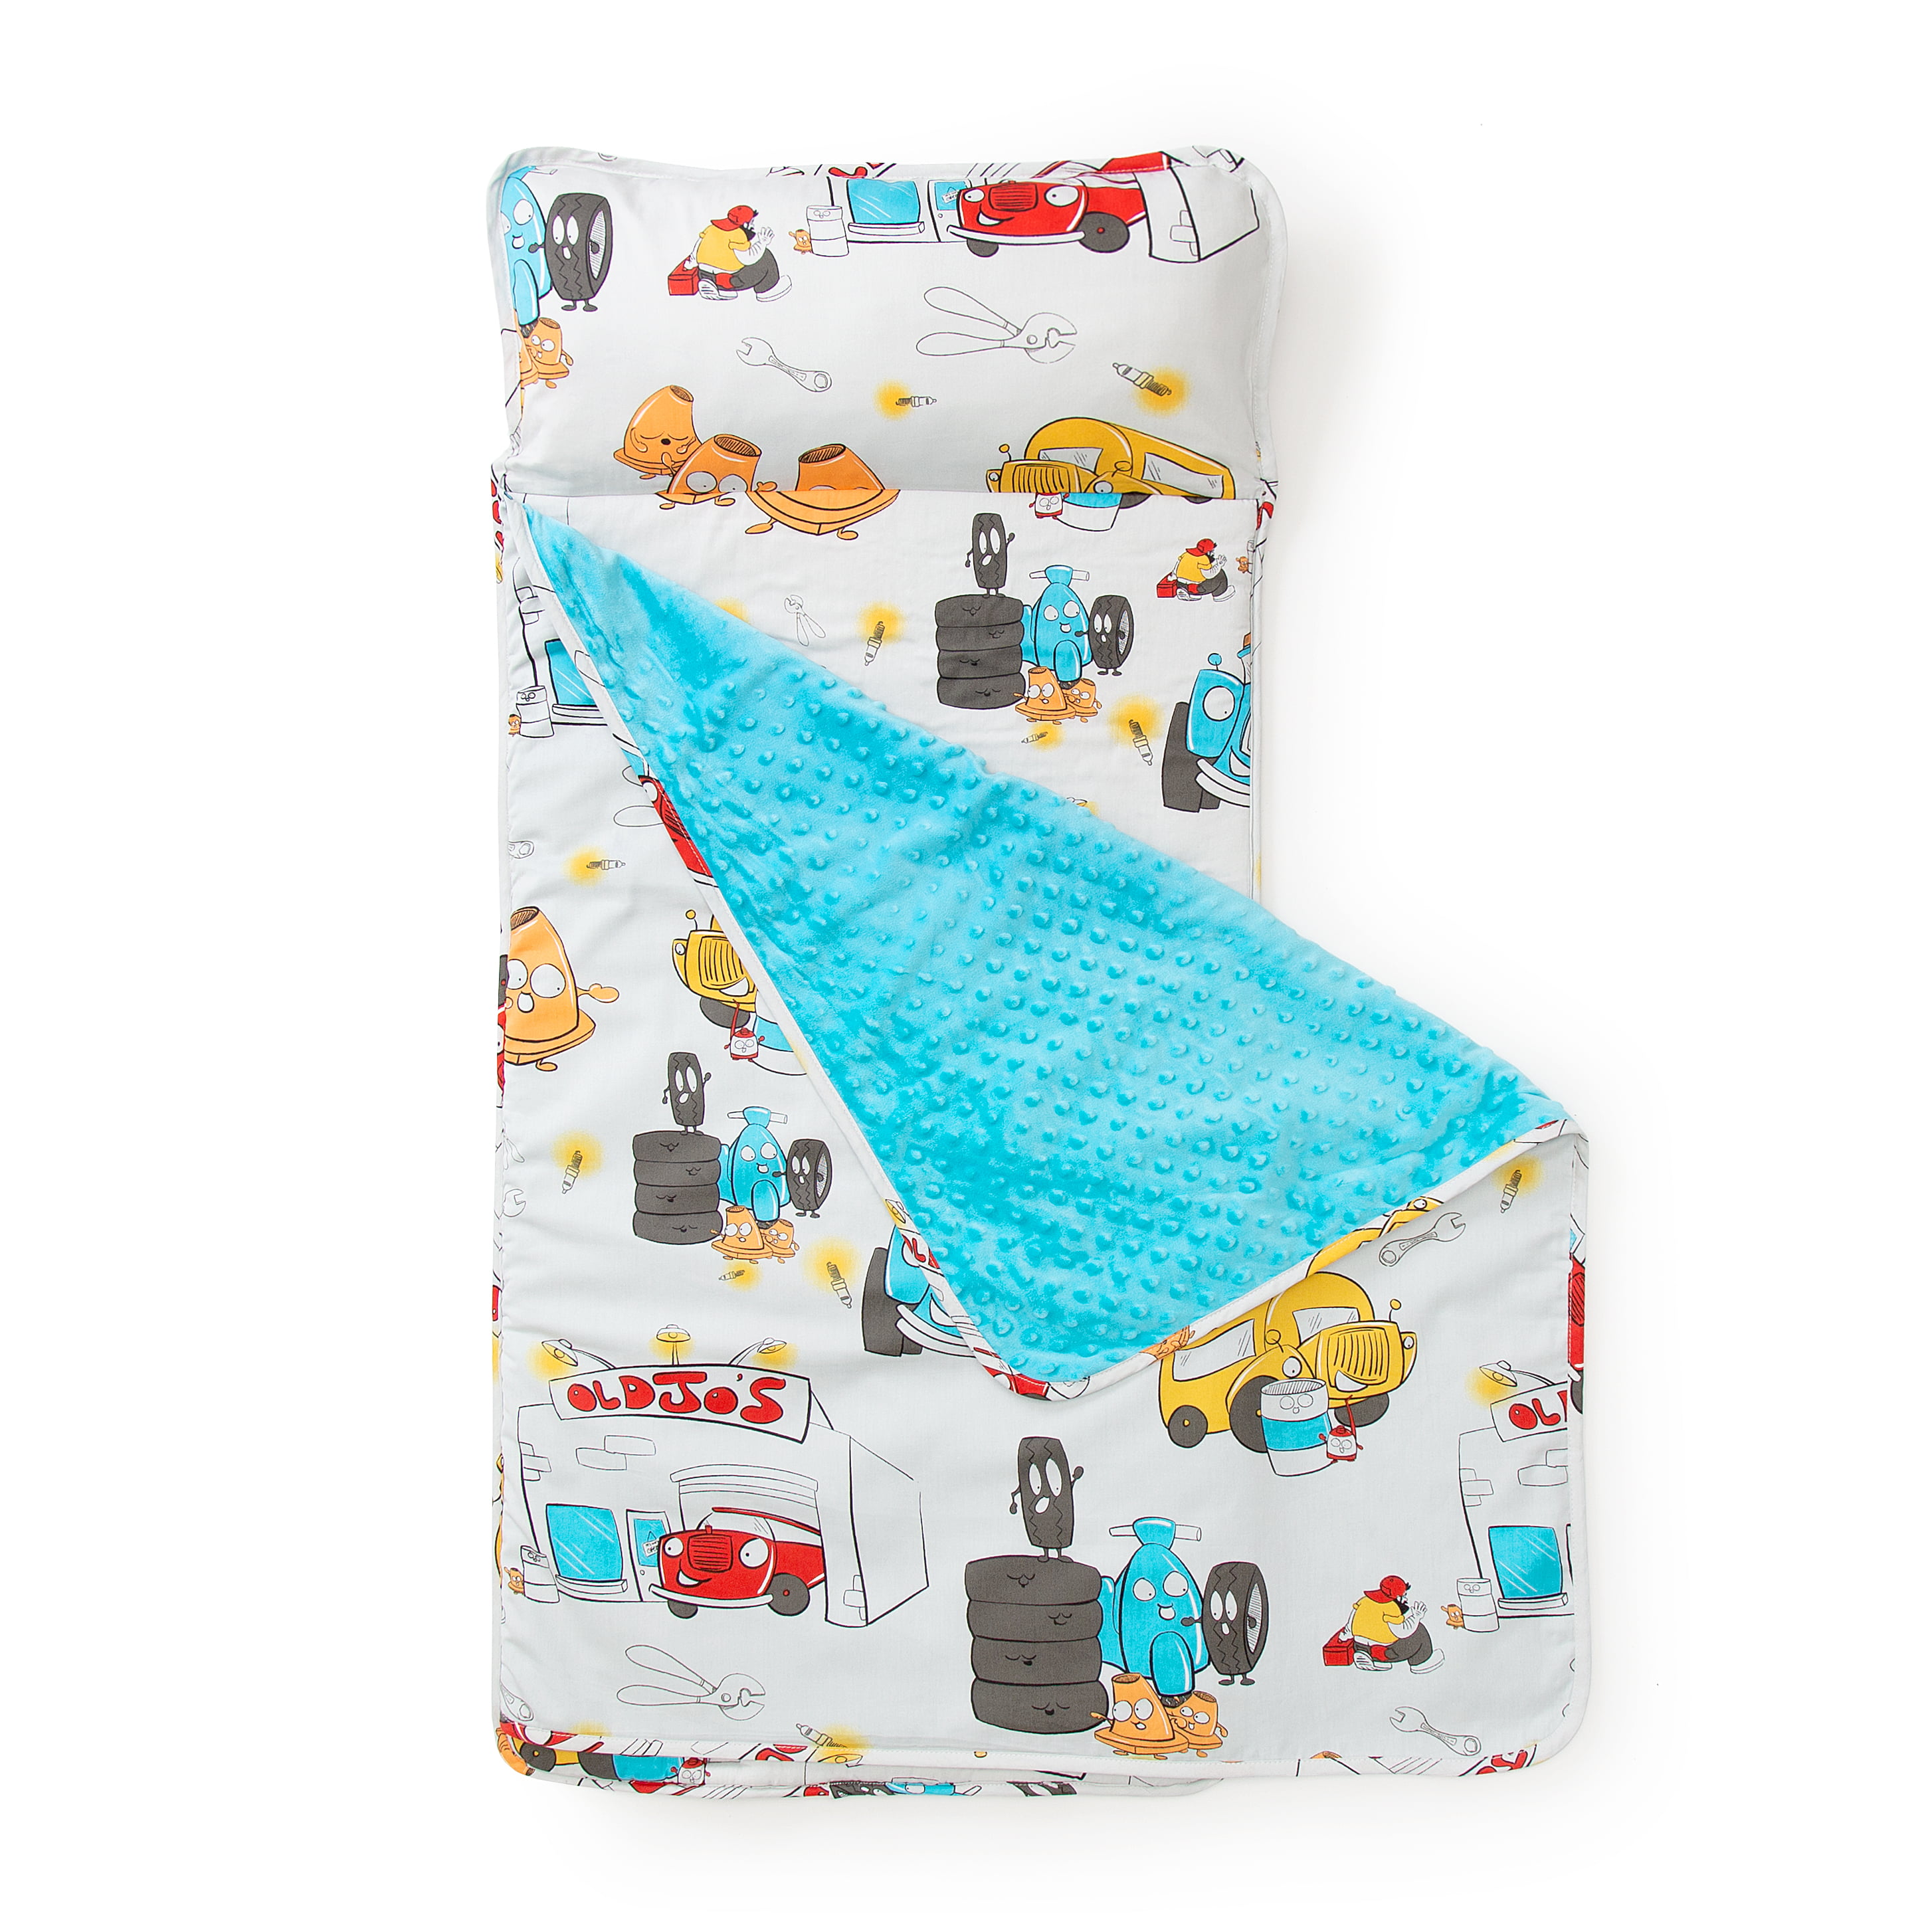 Portable Slumber Bag for Toddler Boys and Girls Lightweight and Soft Sleepover Set Built-in Cotton Liner Nordic Forest Okngr Kids Nap Mat Size S